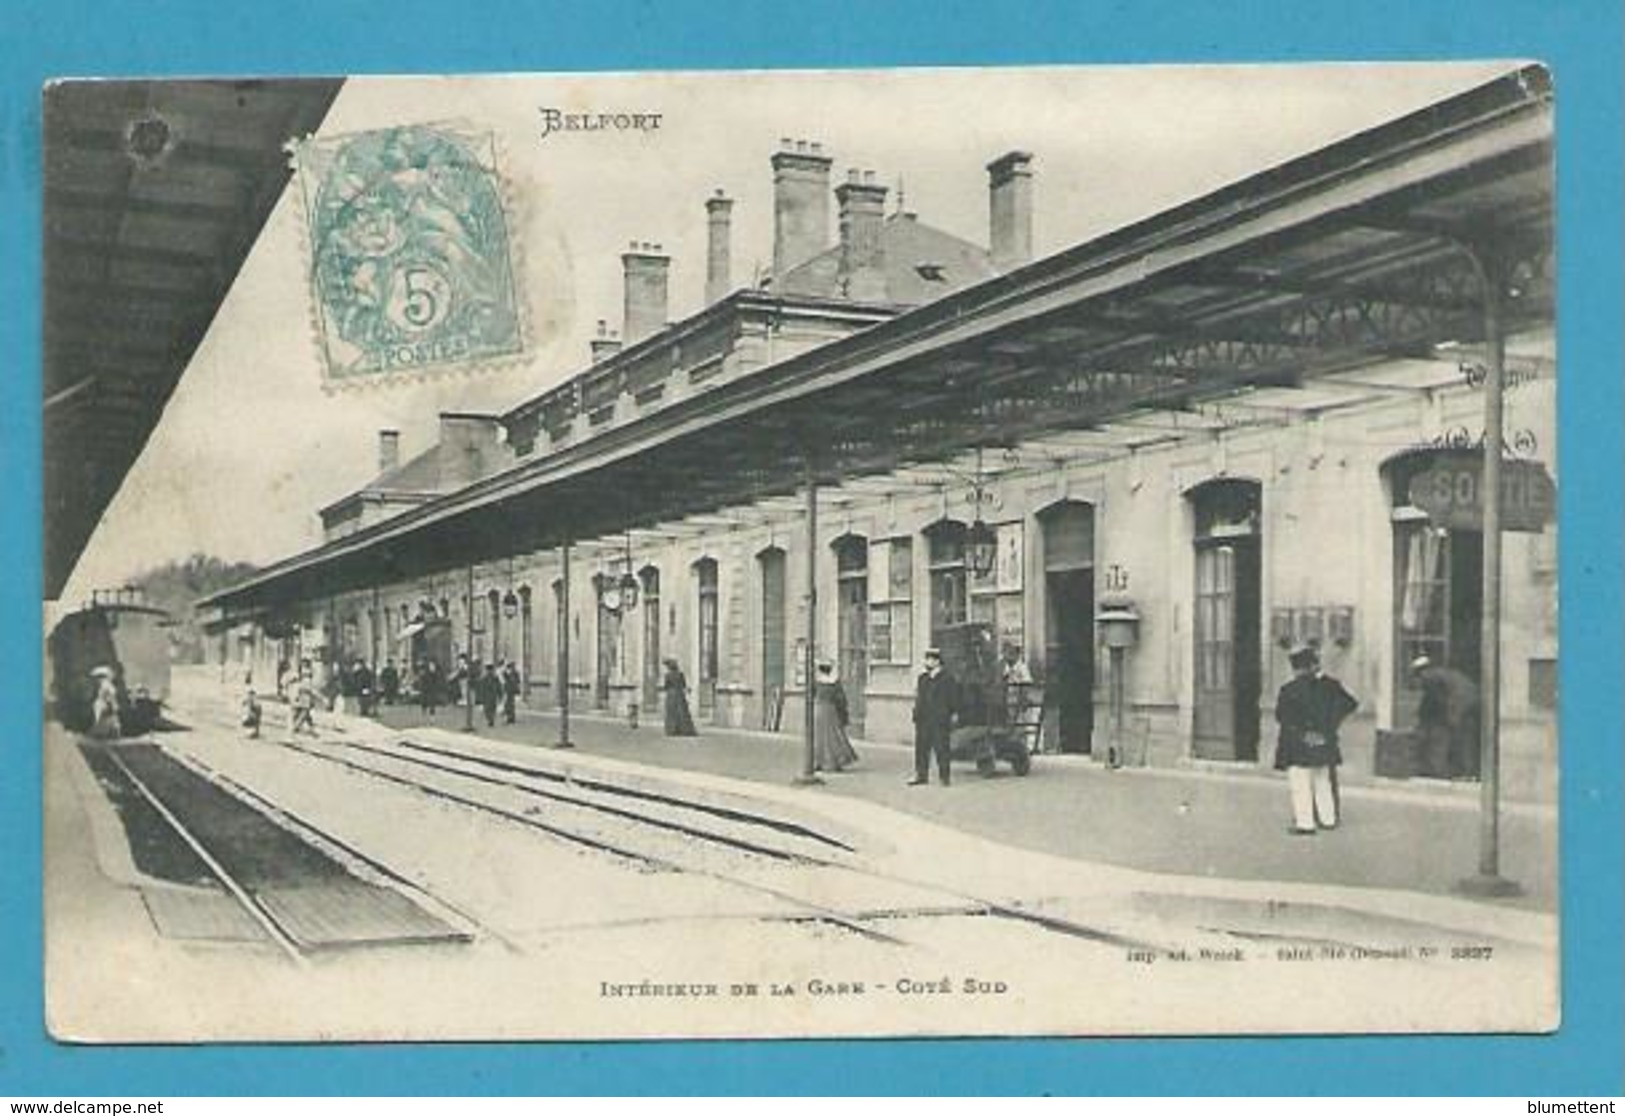 CPA - Chemin De Fer Train La Gare BELFORT 90 - Belfort - Ciudad